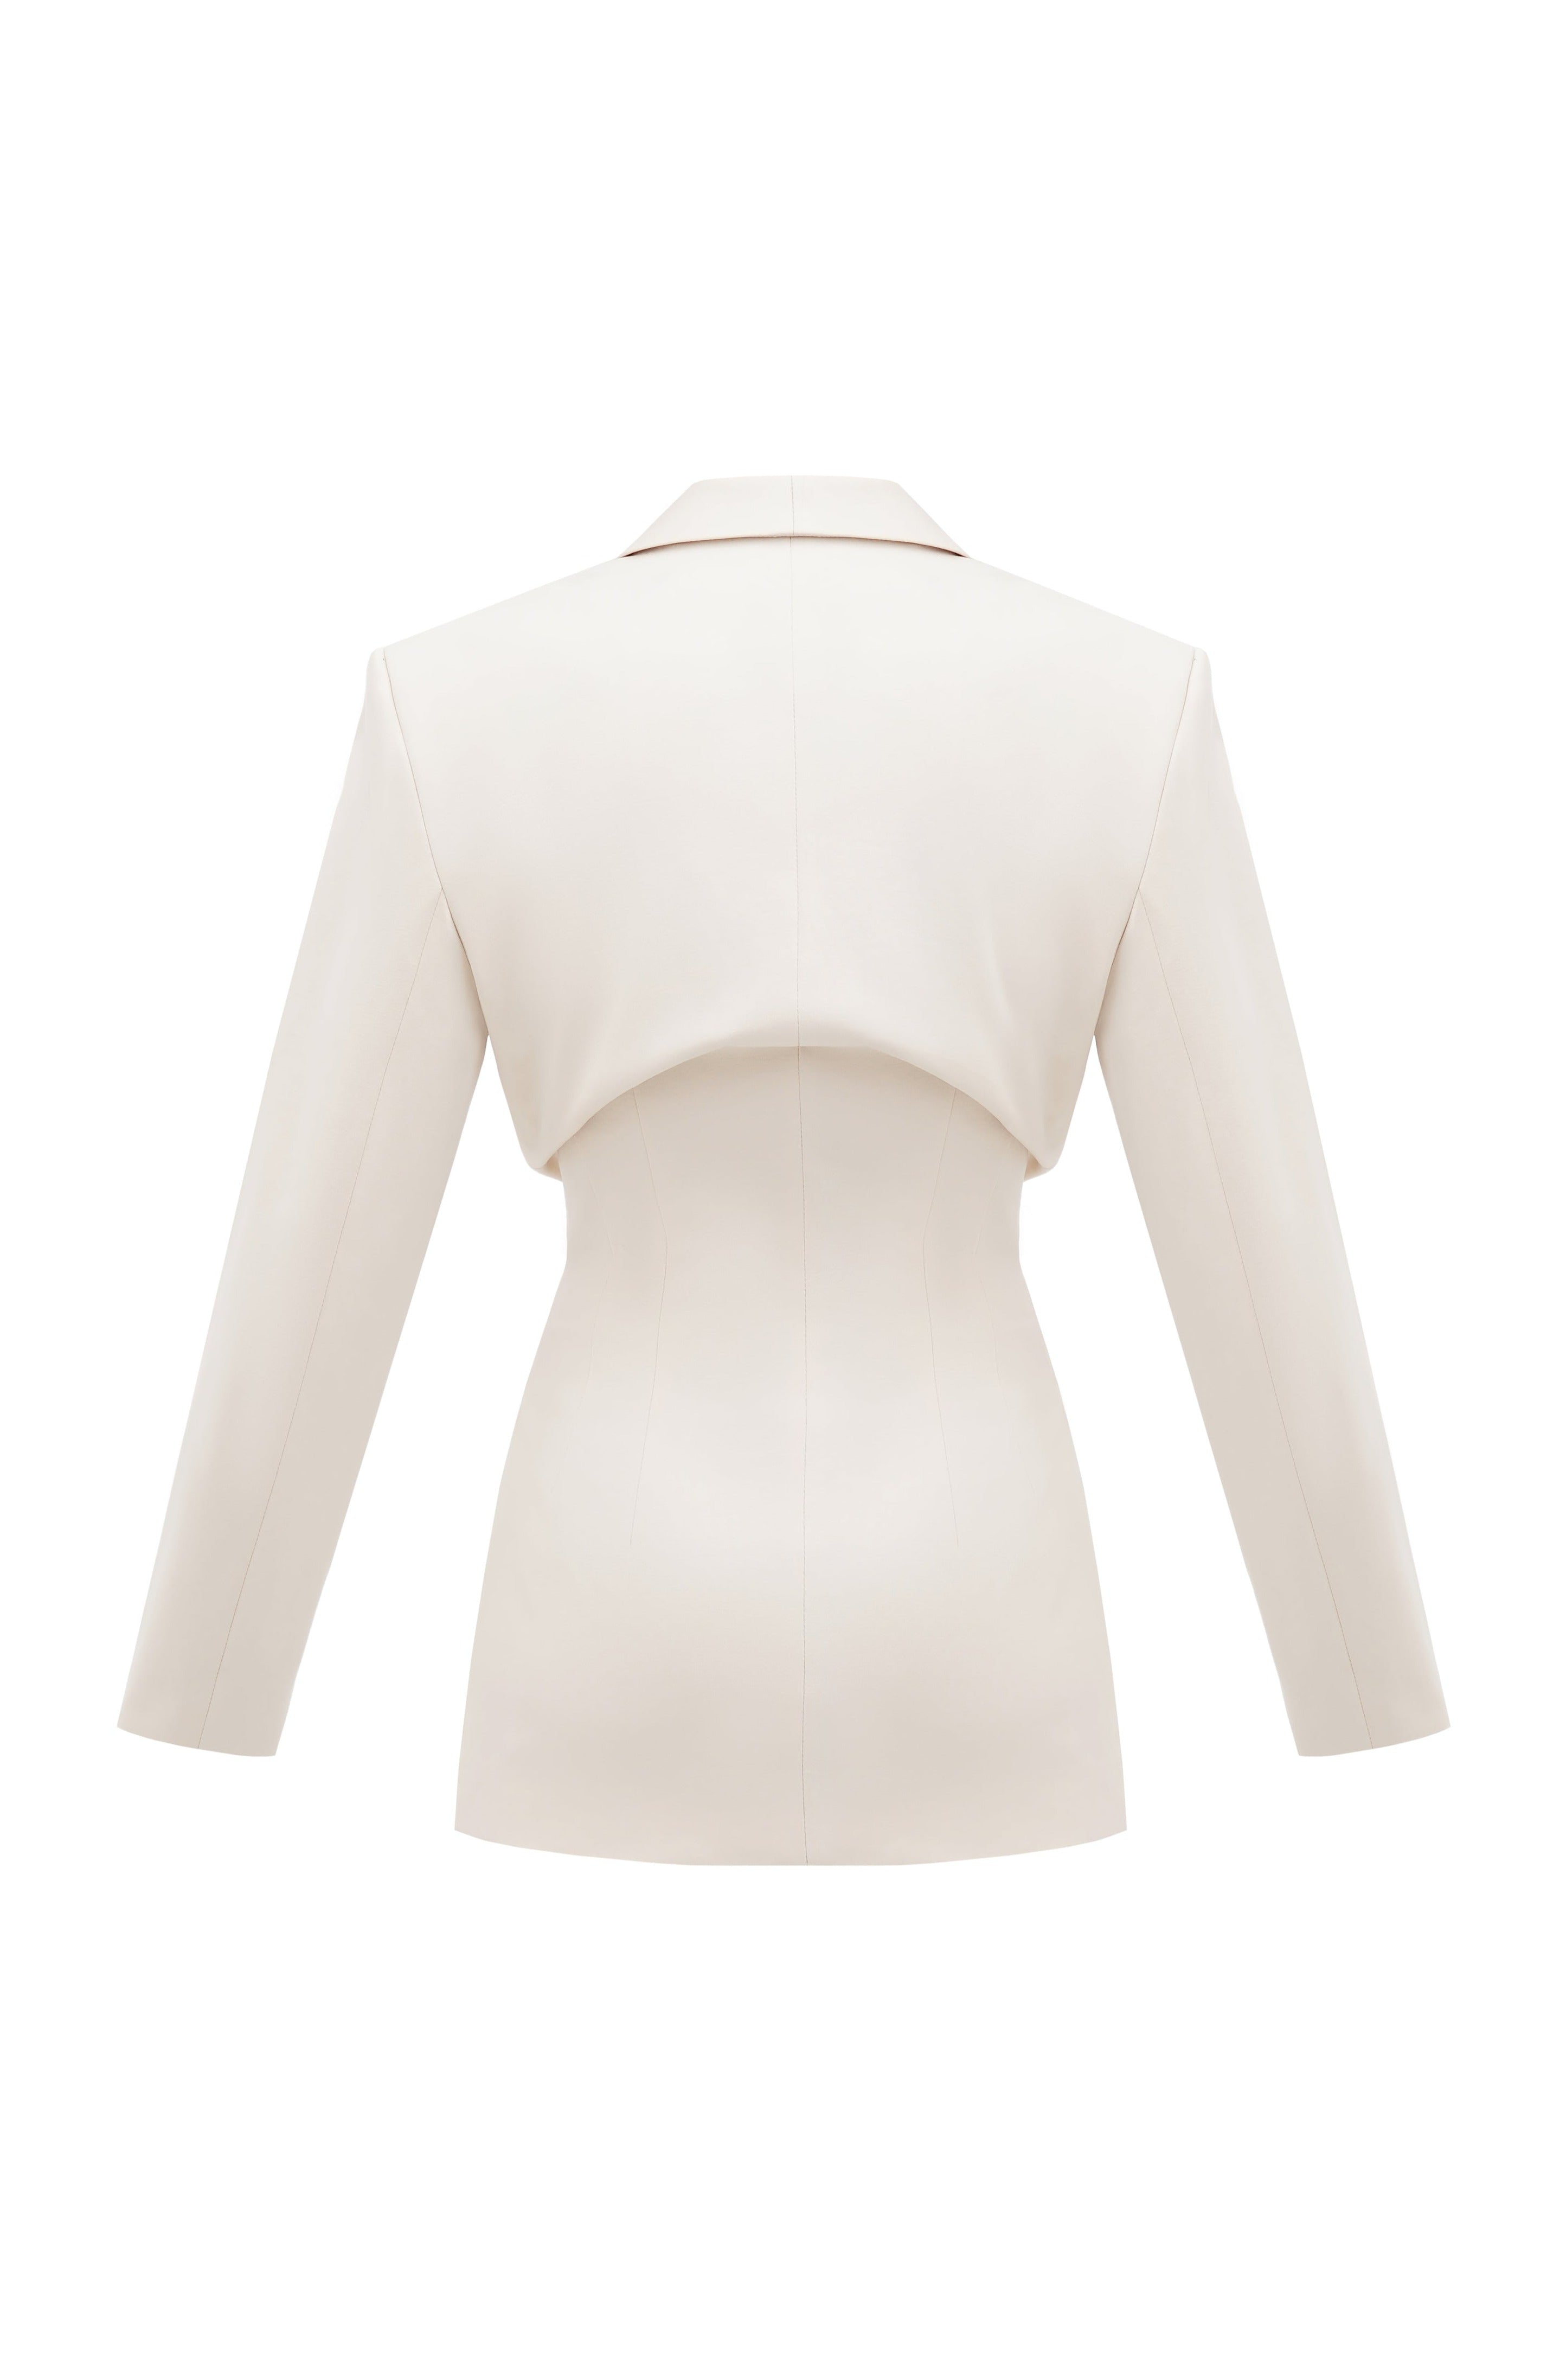 A back of an organic cotton interlock blazer in beige color